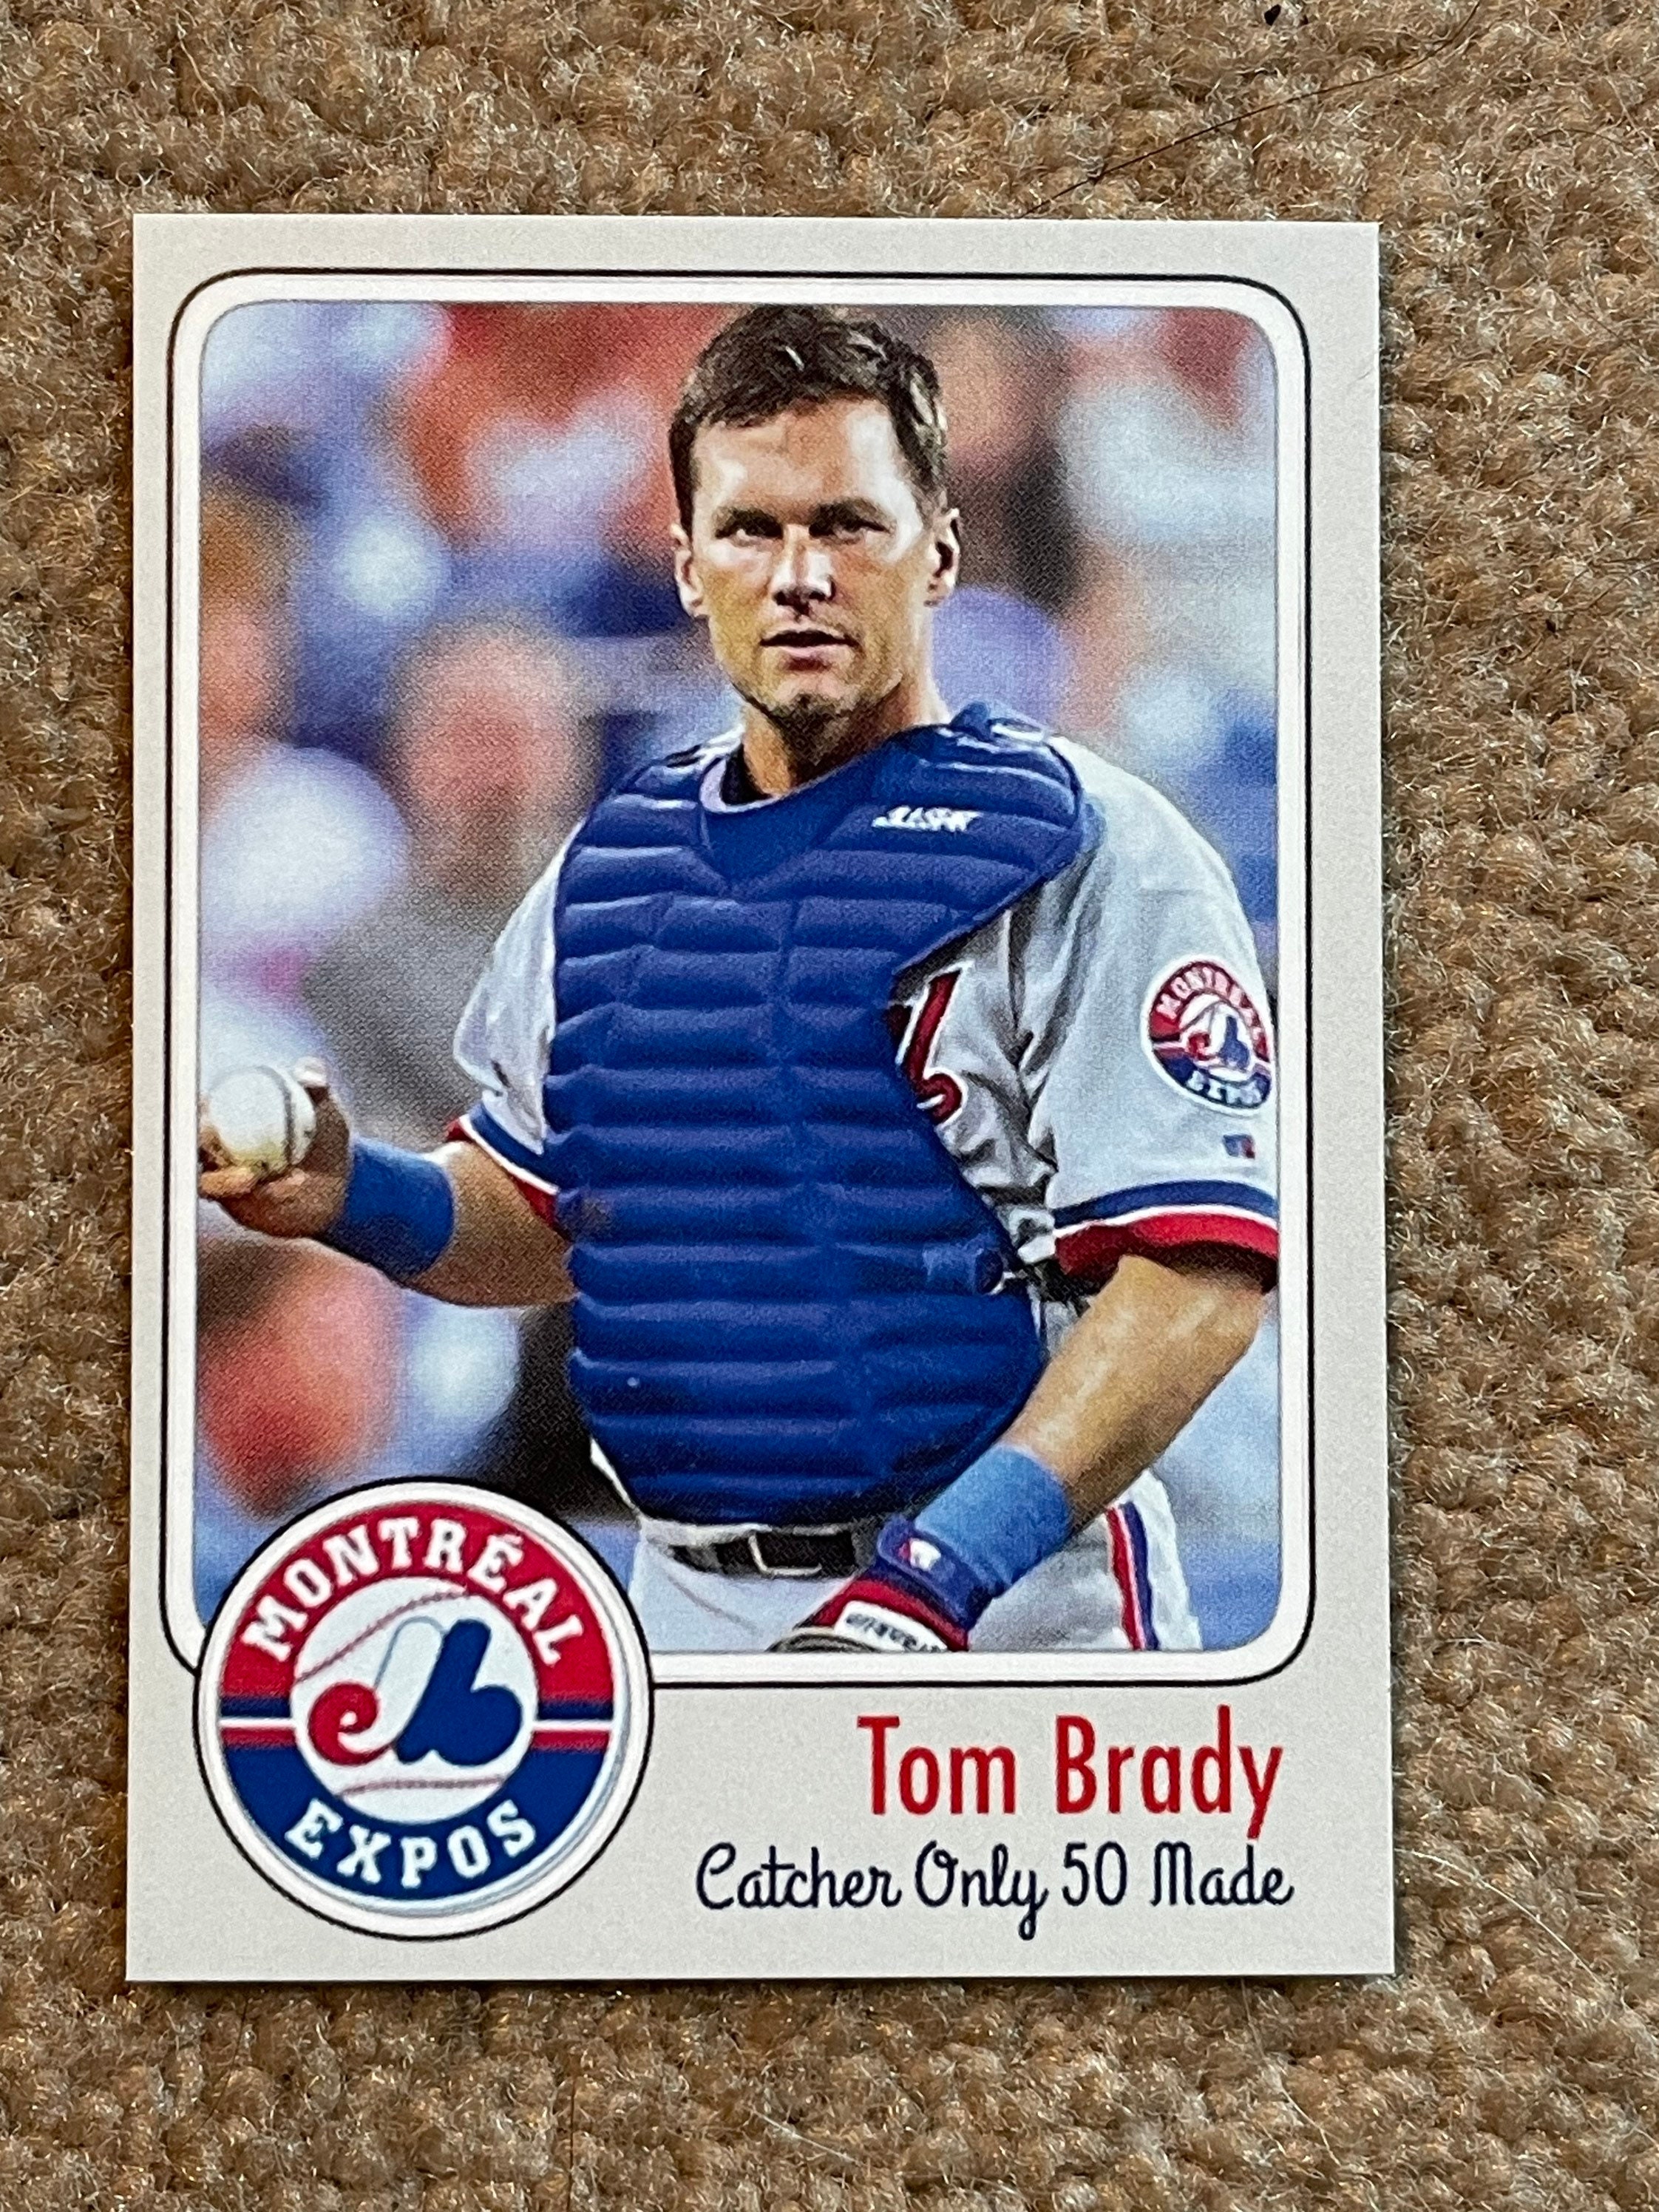 Only 50 Made Tom Brady Montreal Expos Rookie Custom Baseball Card